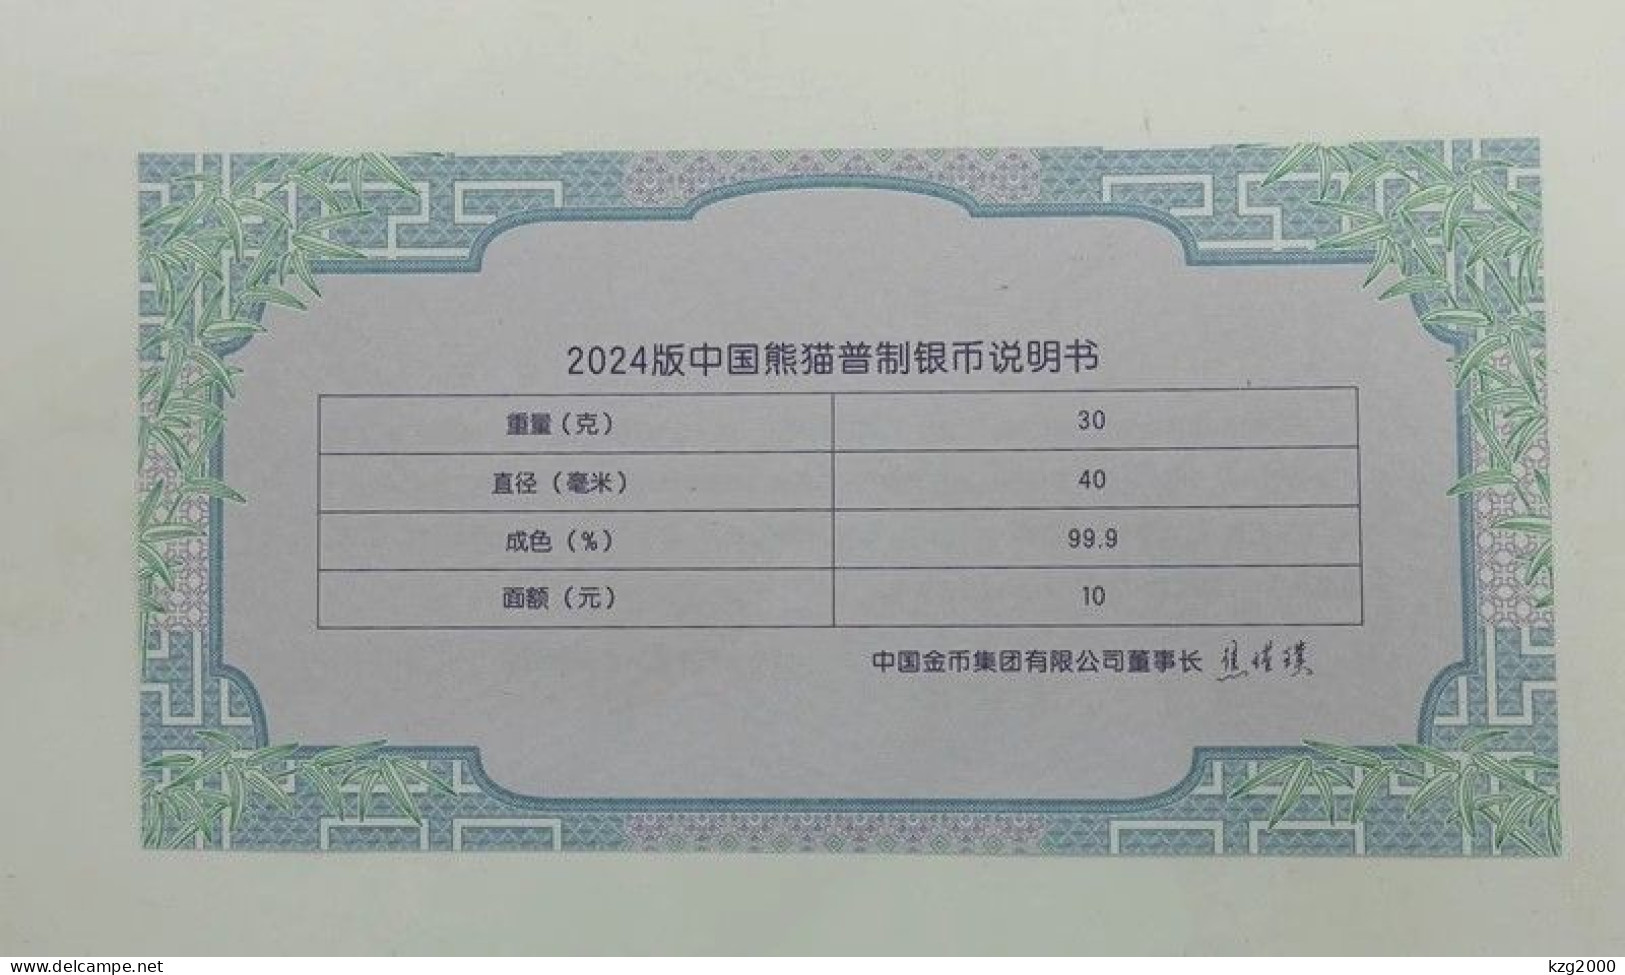 China 2024  Panda Silver Coin 30g  Ag.999  With Box & Certificate 1Pcs Coin RMB 10 Yuan - Cina